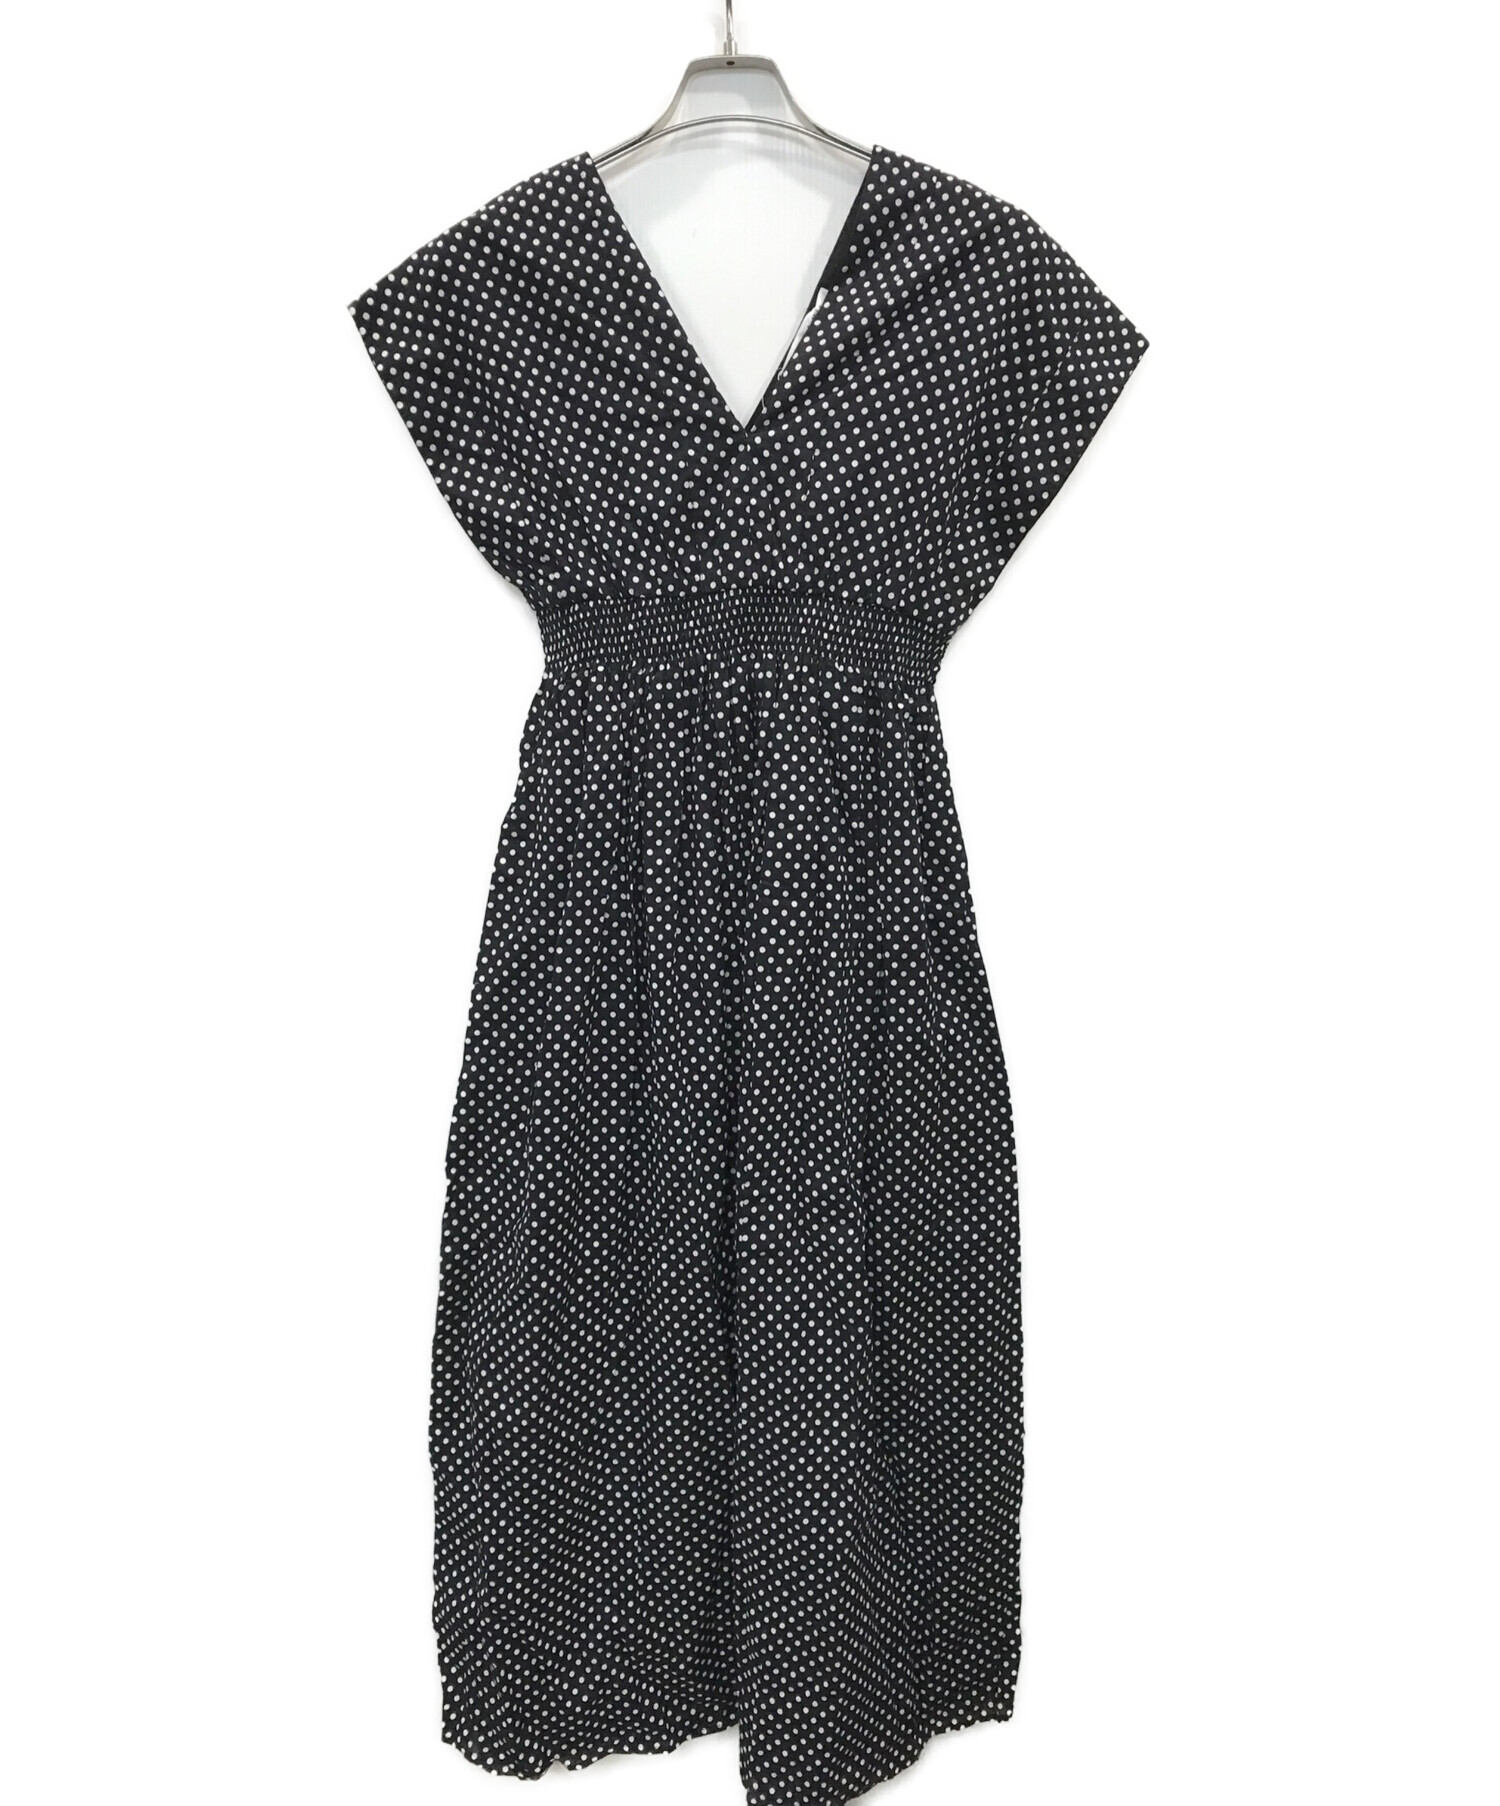 MARIHA (マリハ) 夏の光のドレス ノースリーブワンピース ブラック サイズ:36